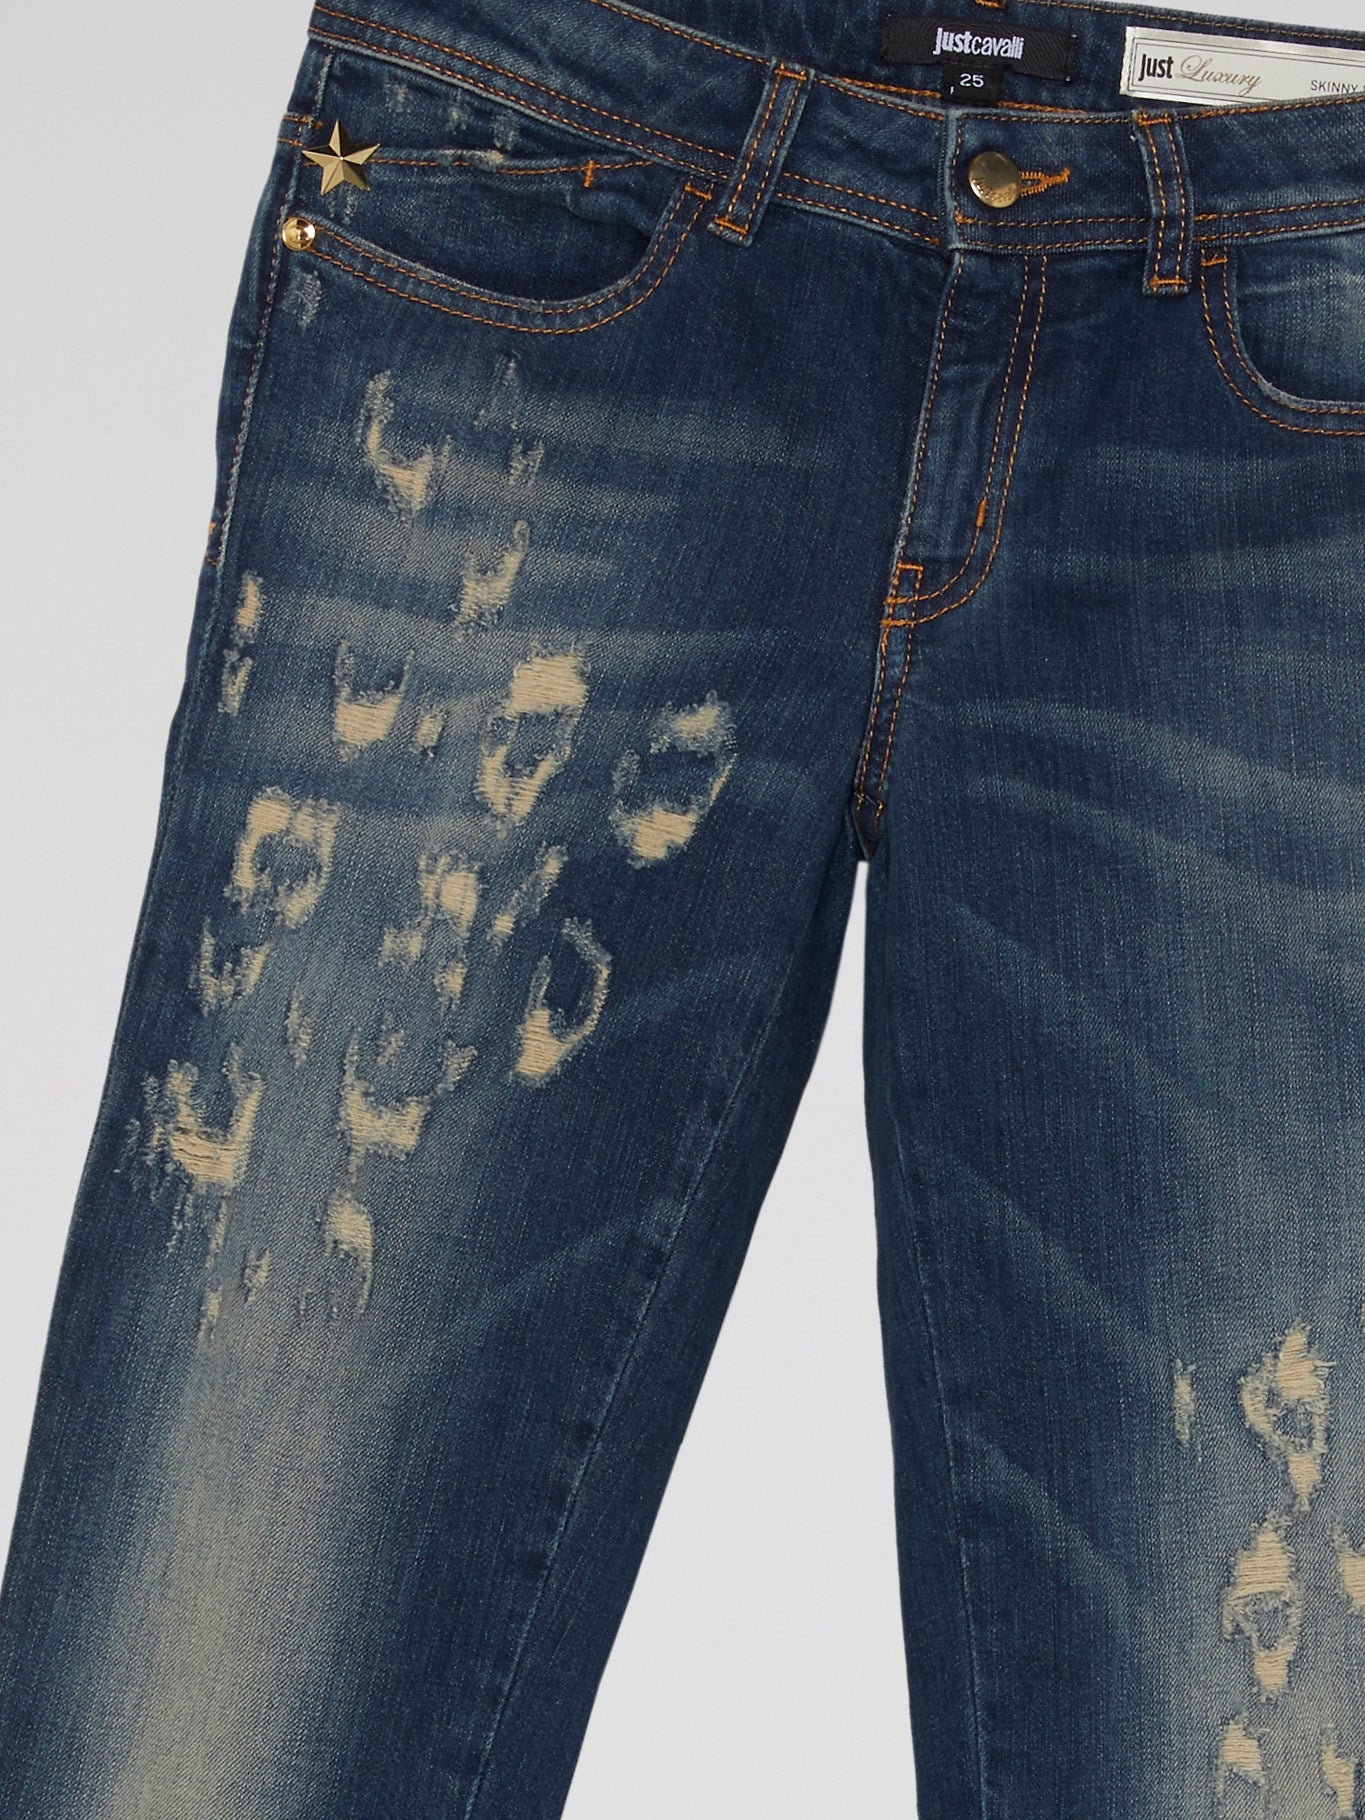 Leopard Effect Distressed Jeans